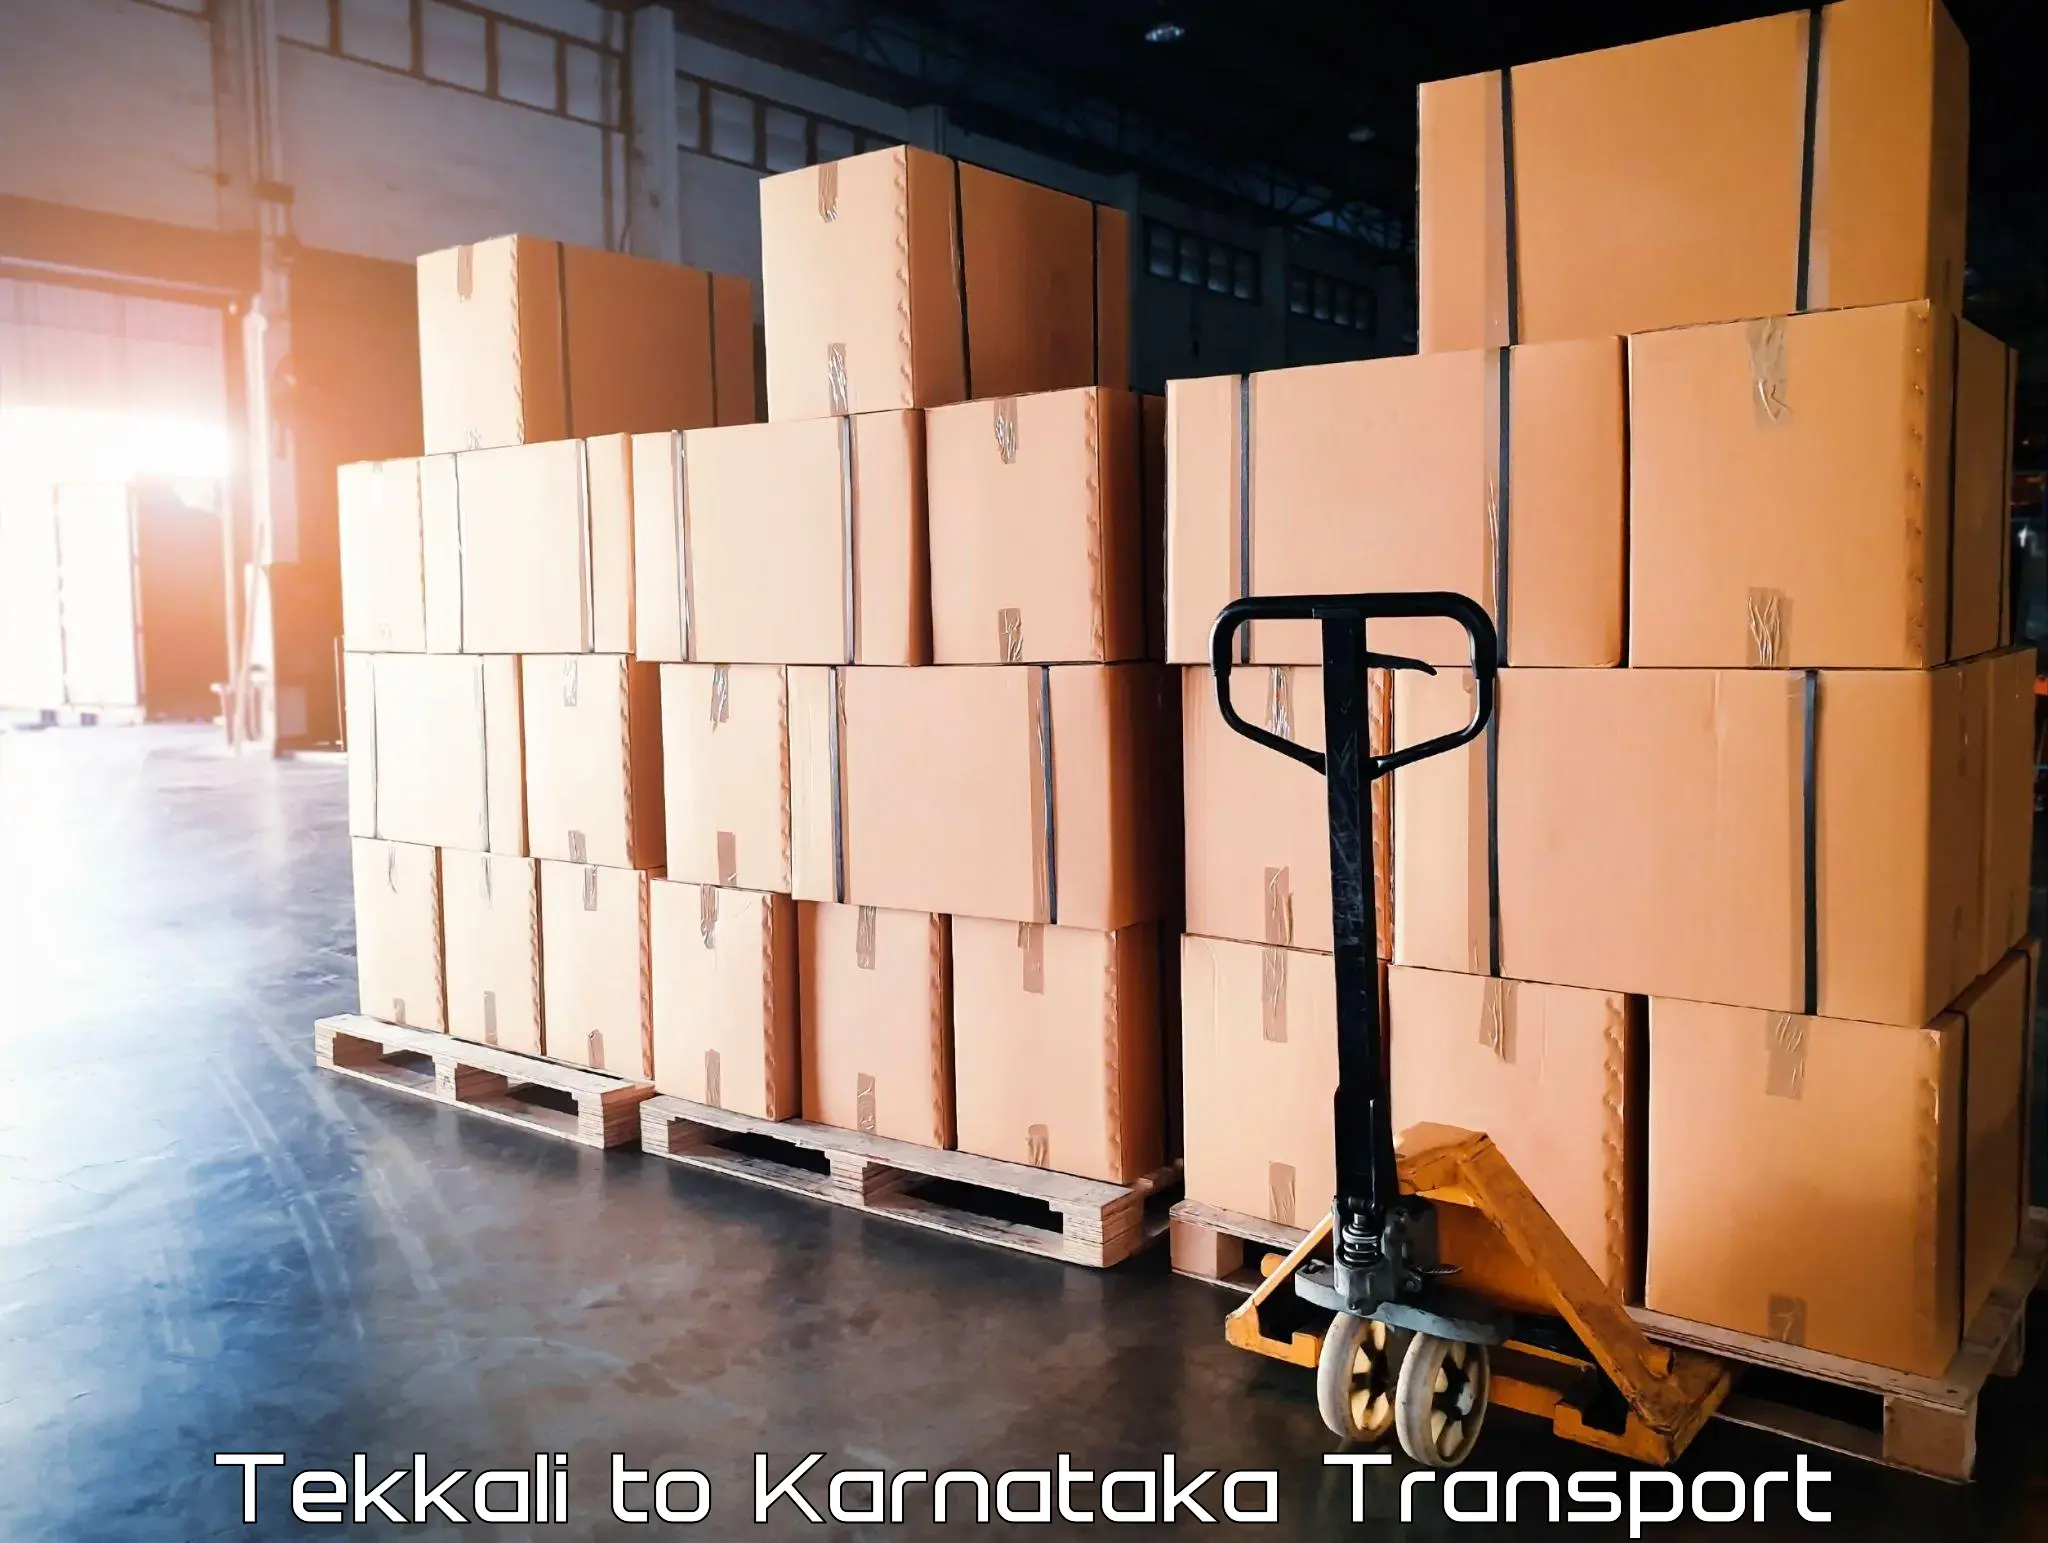 Transport bike from one state to another Tekkali to Karnataka